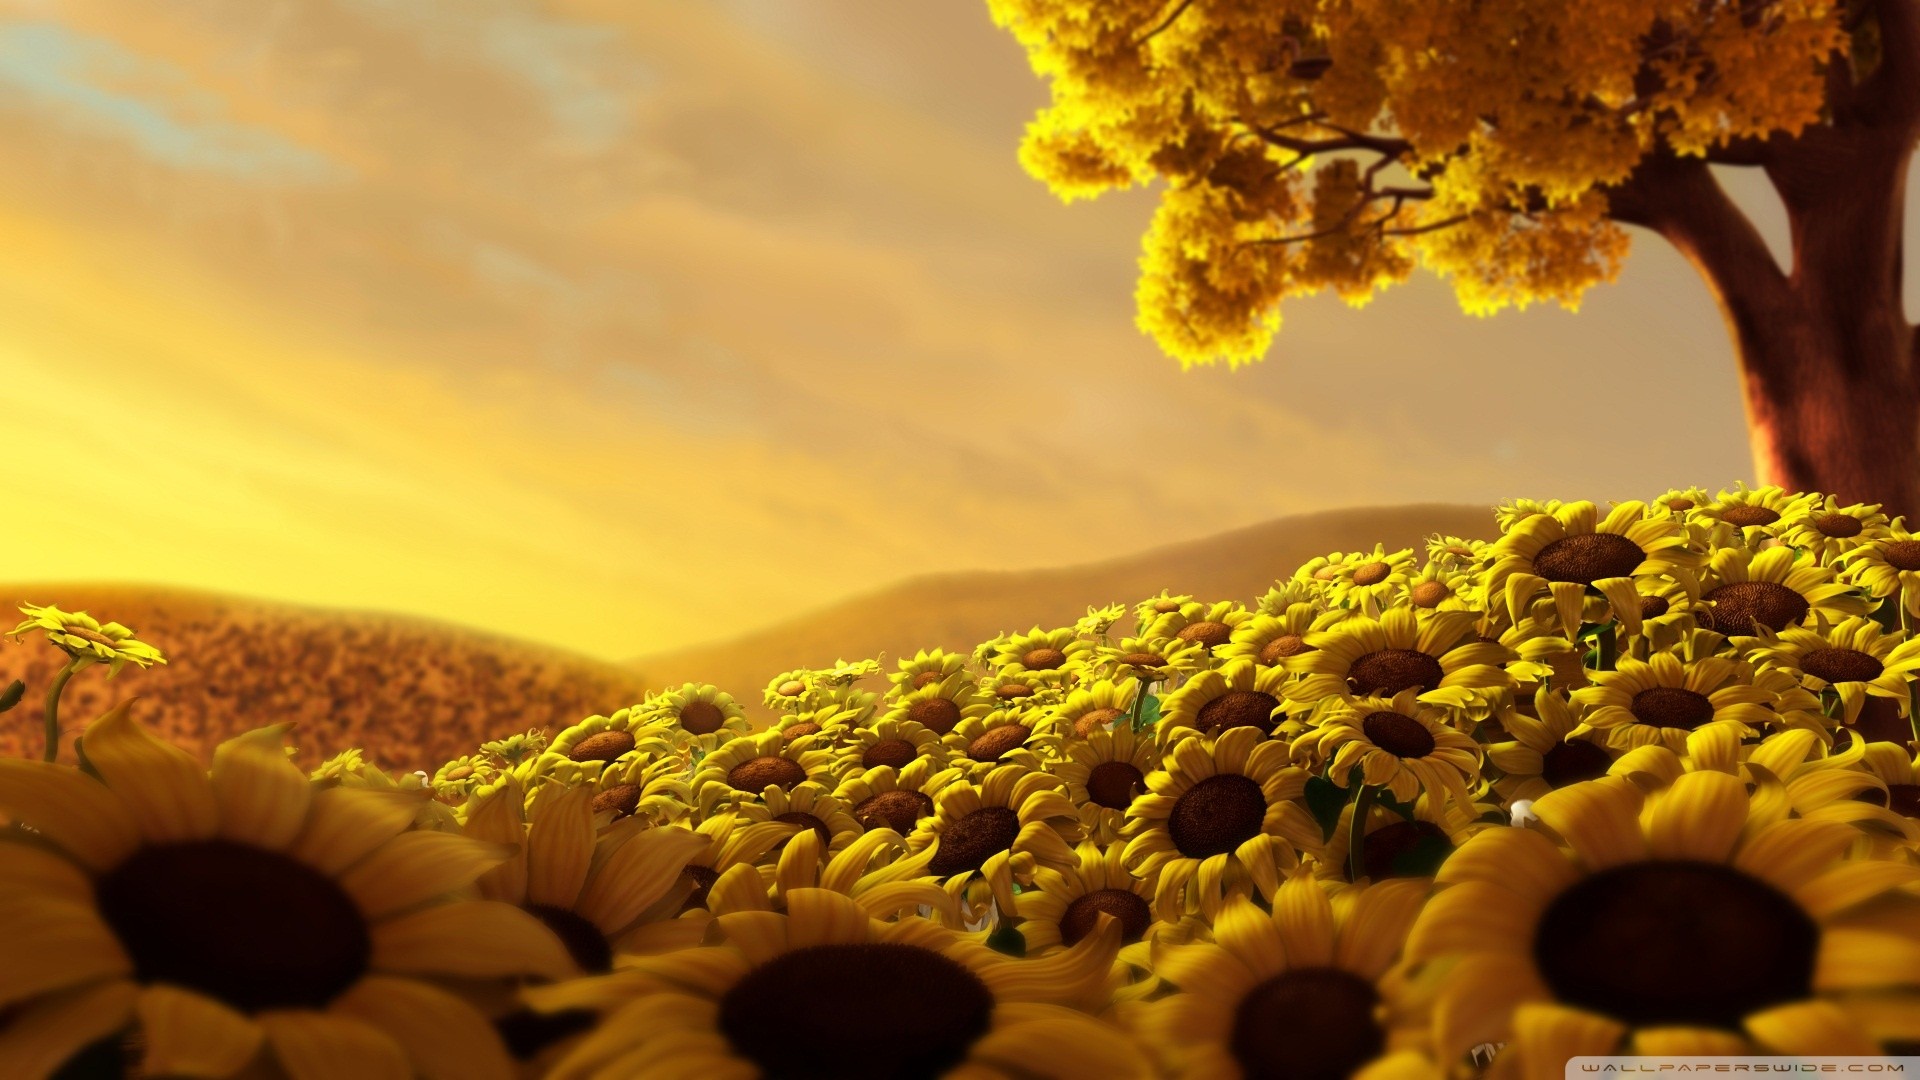 General 1920x1080 sunflowers flowers trees plants digital art CGI sunlight